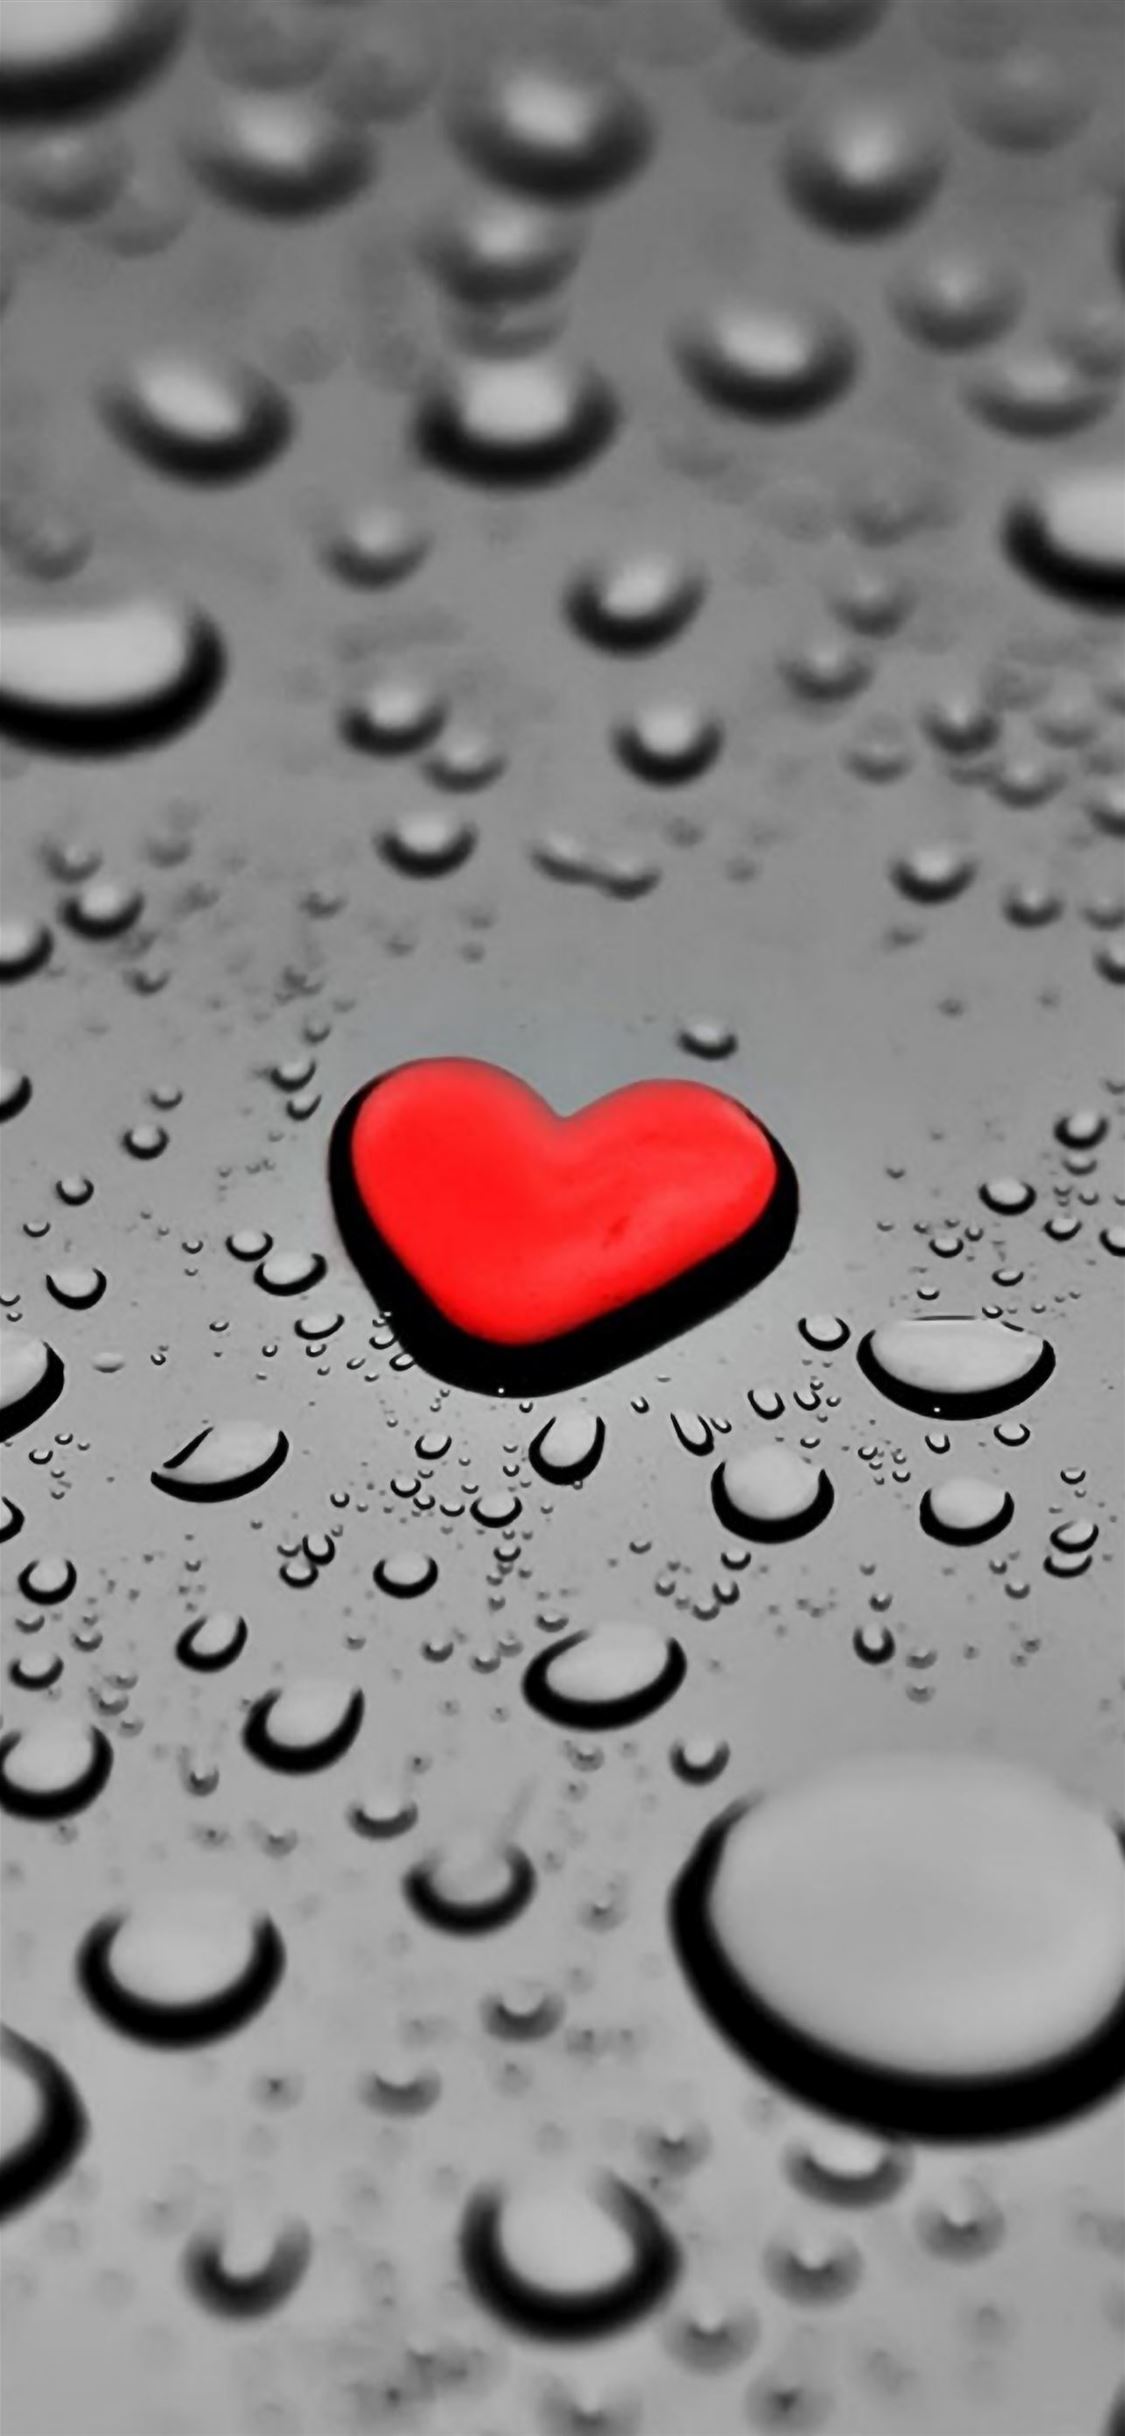 Red Drop Heart iPhone wallpaper 